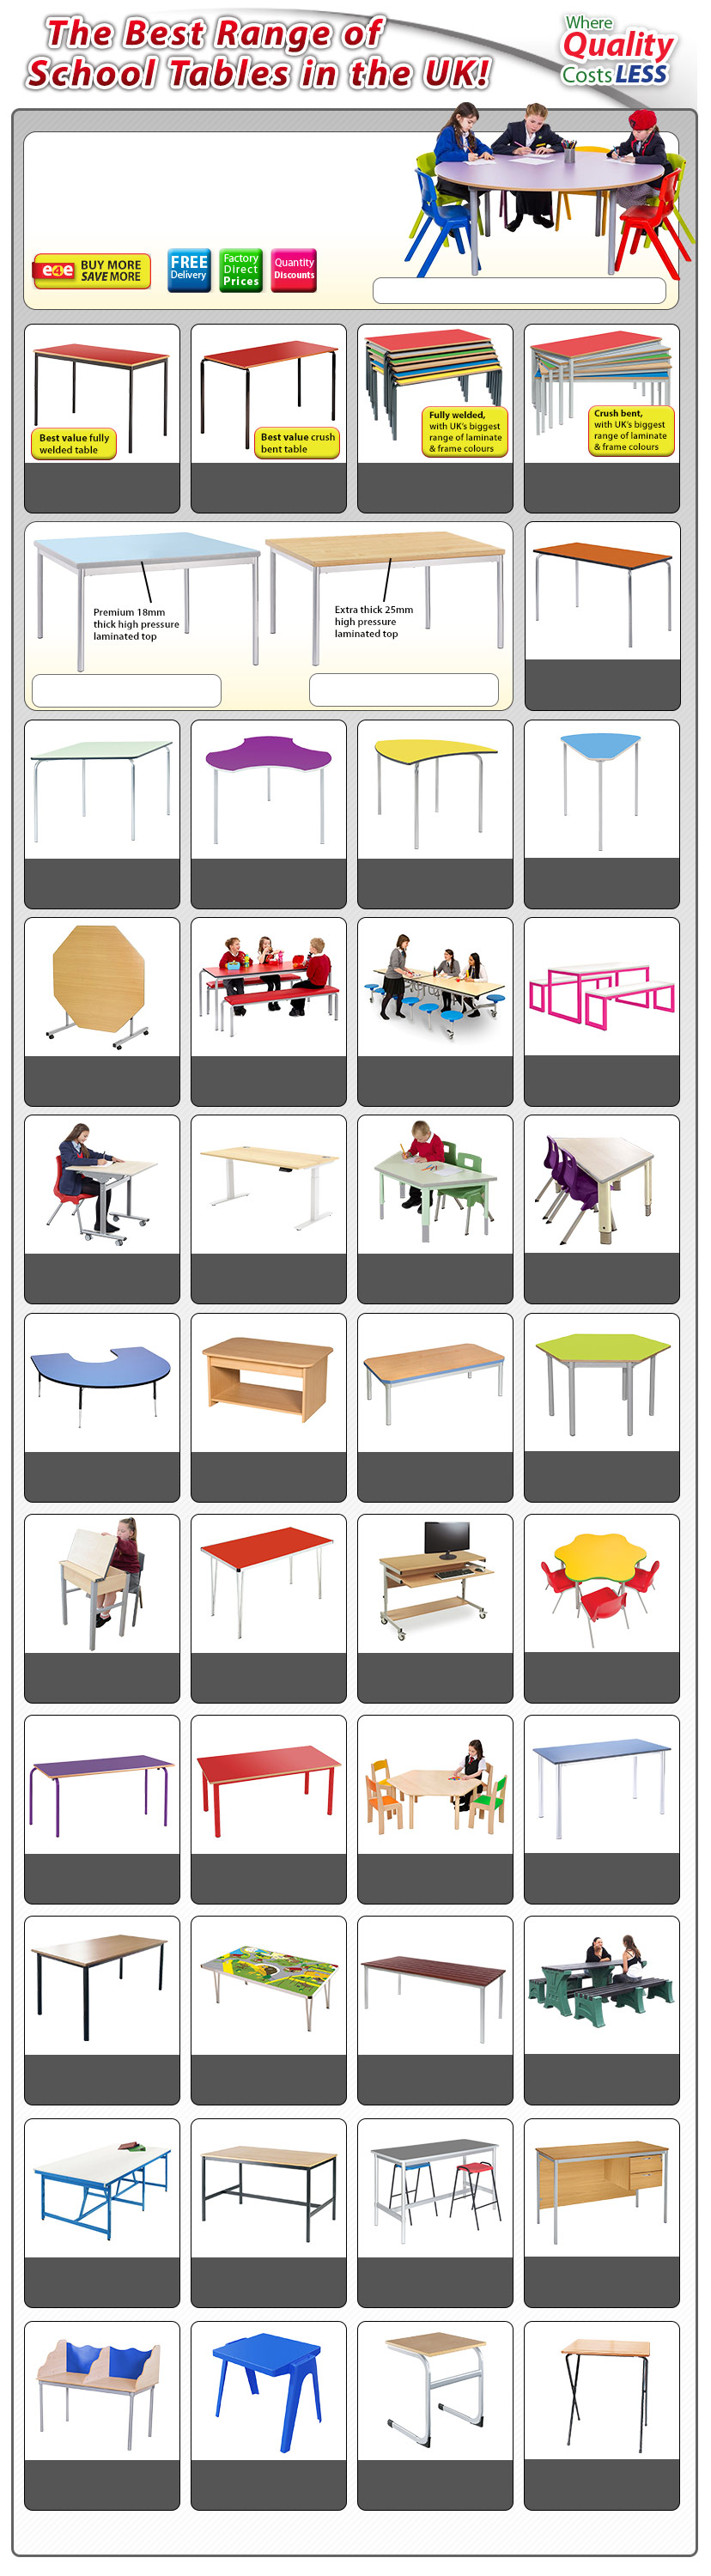 school furniture e4e uk